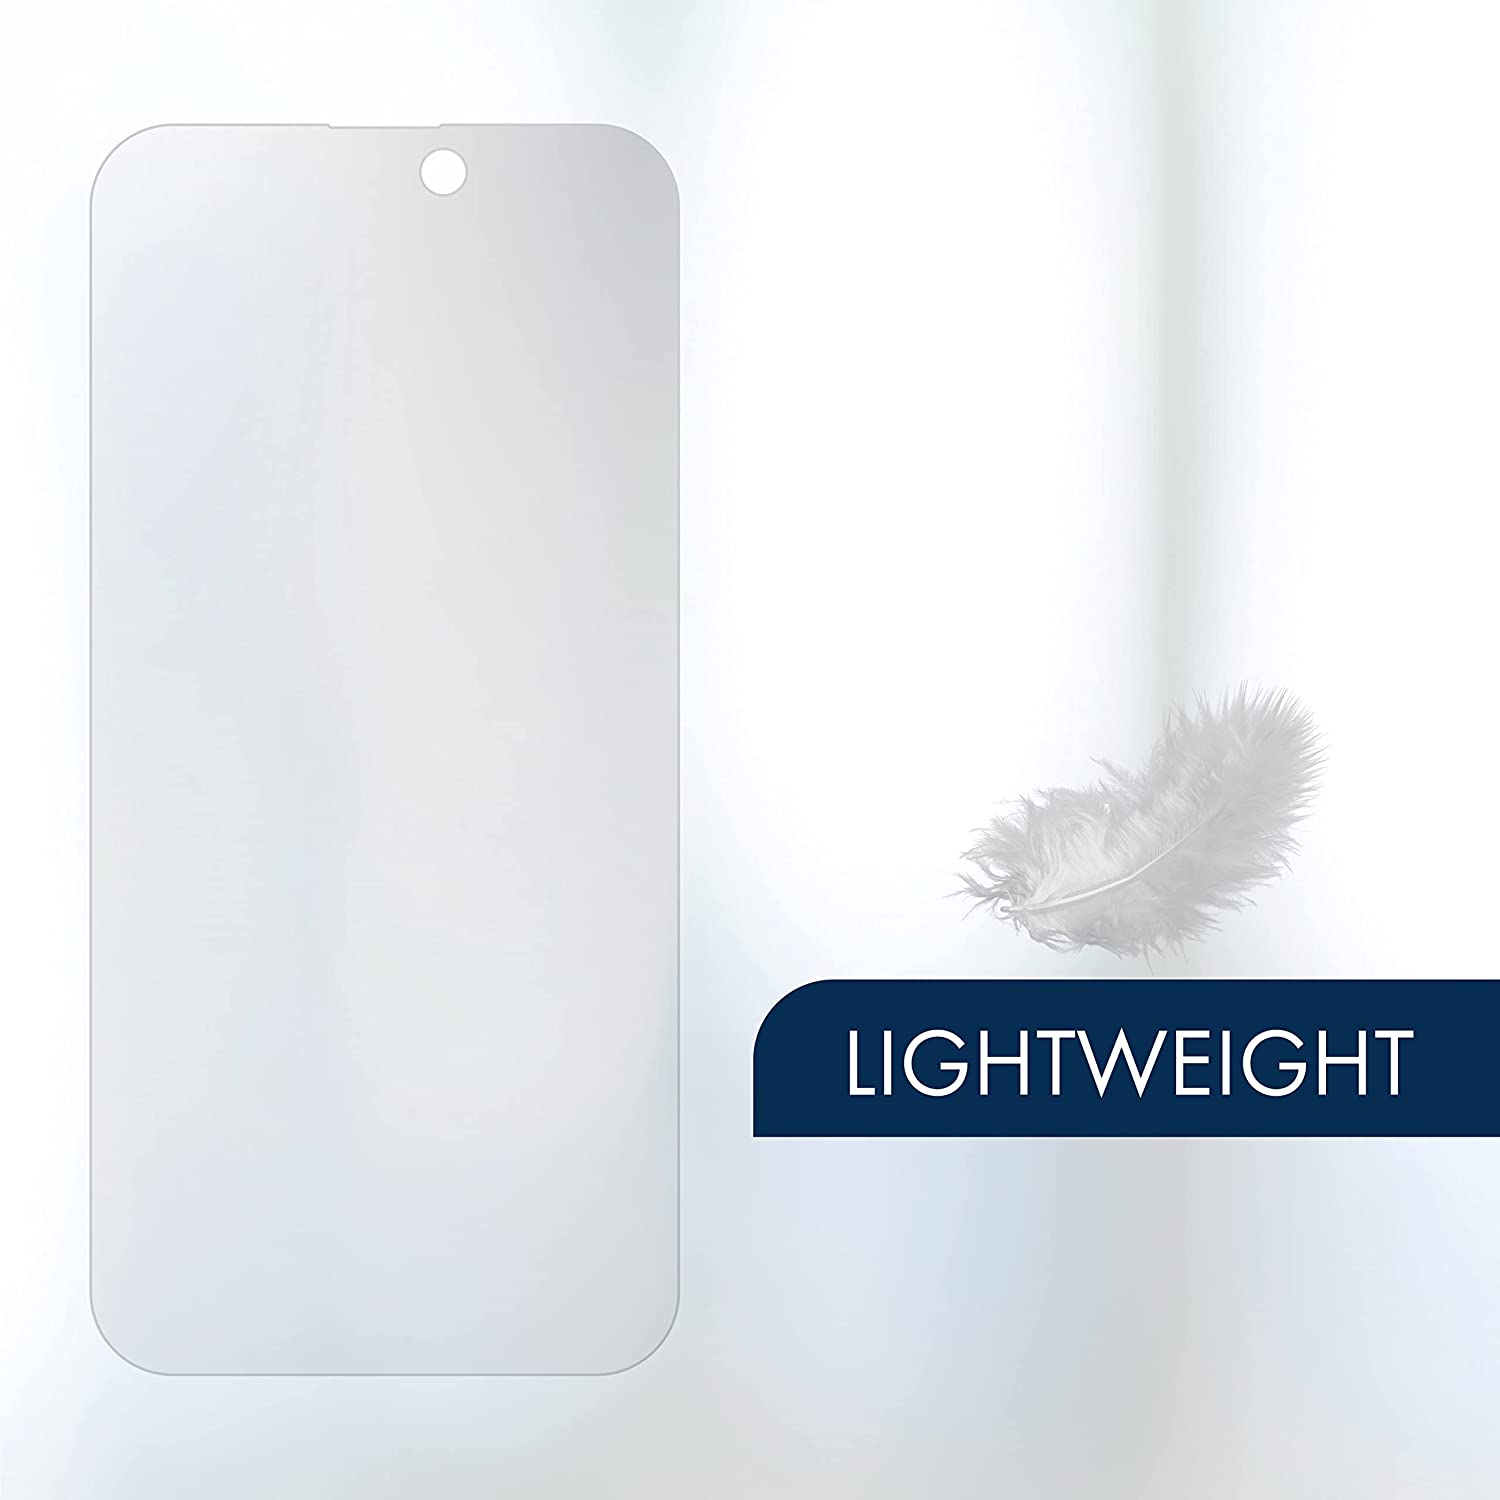 [2 Pack] LG Optimus F3 (LS720 / VM720) (Virgin Mobile / Sprint) Screen Protector (Case Friendly)